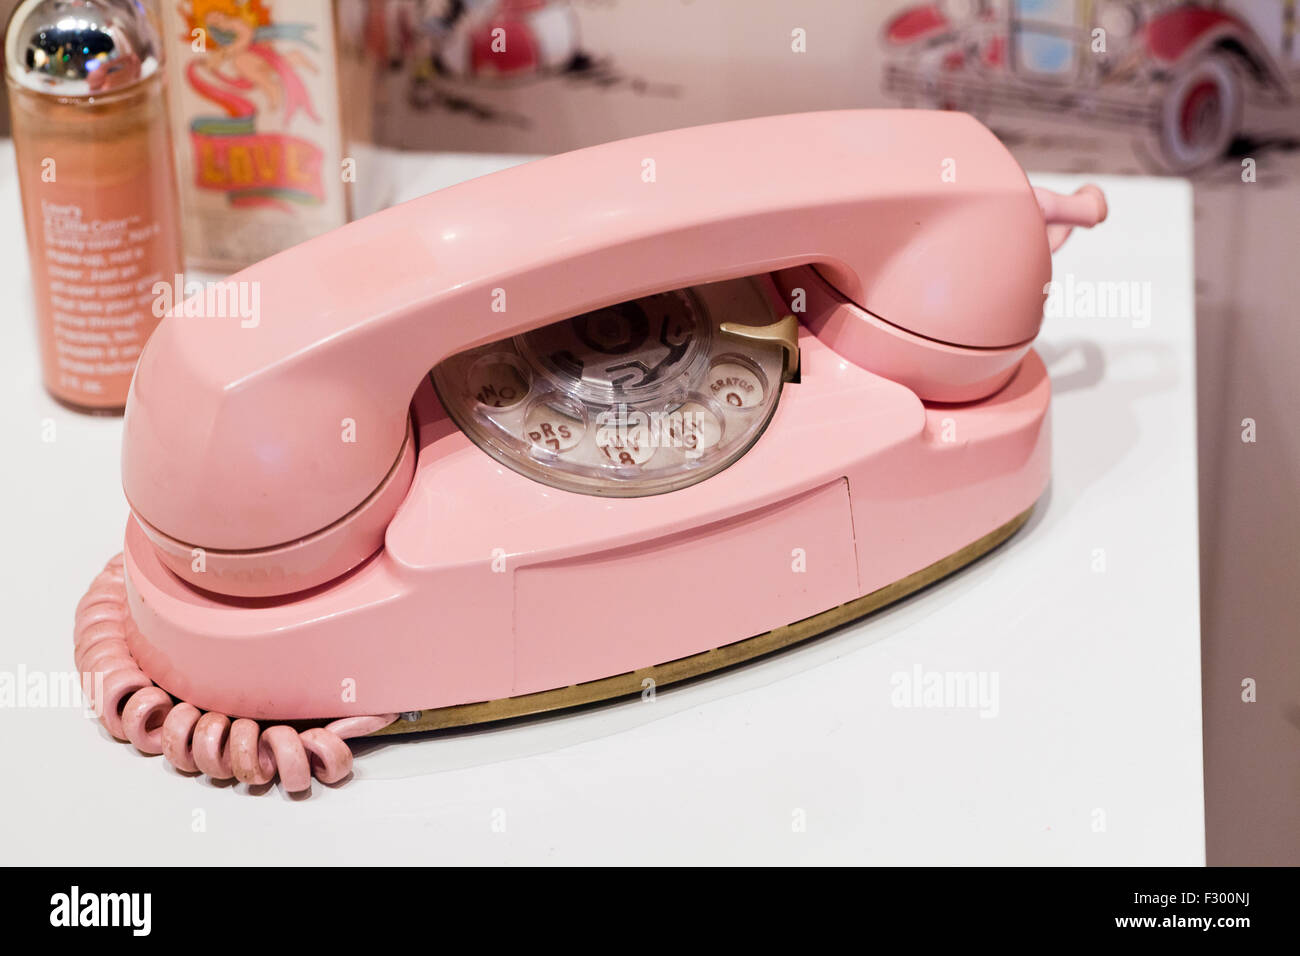 Princess phone, circa 1960s - USA Stock Photo